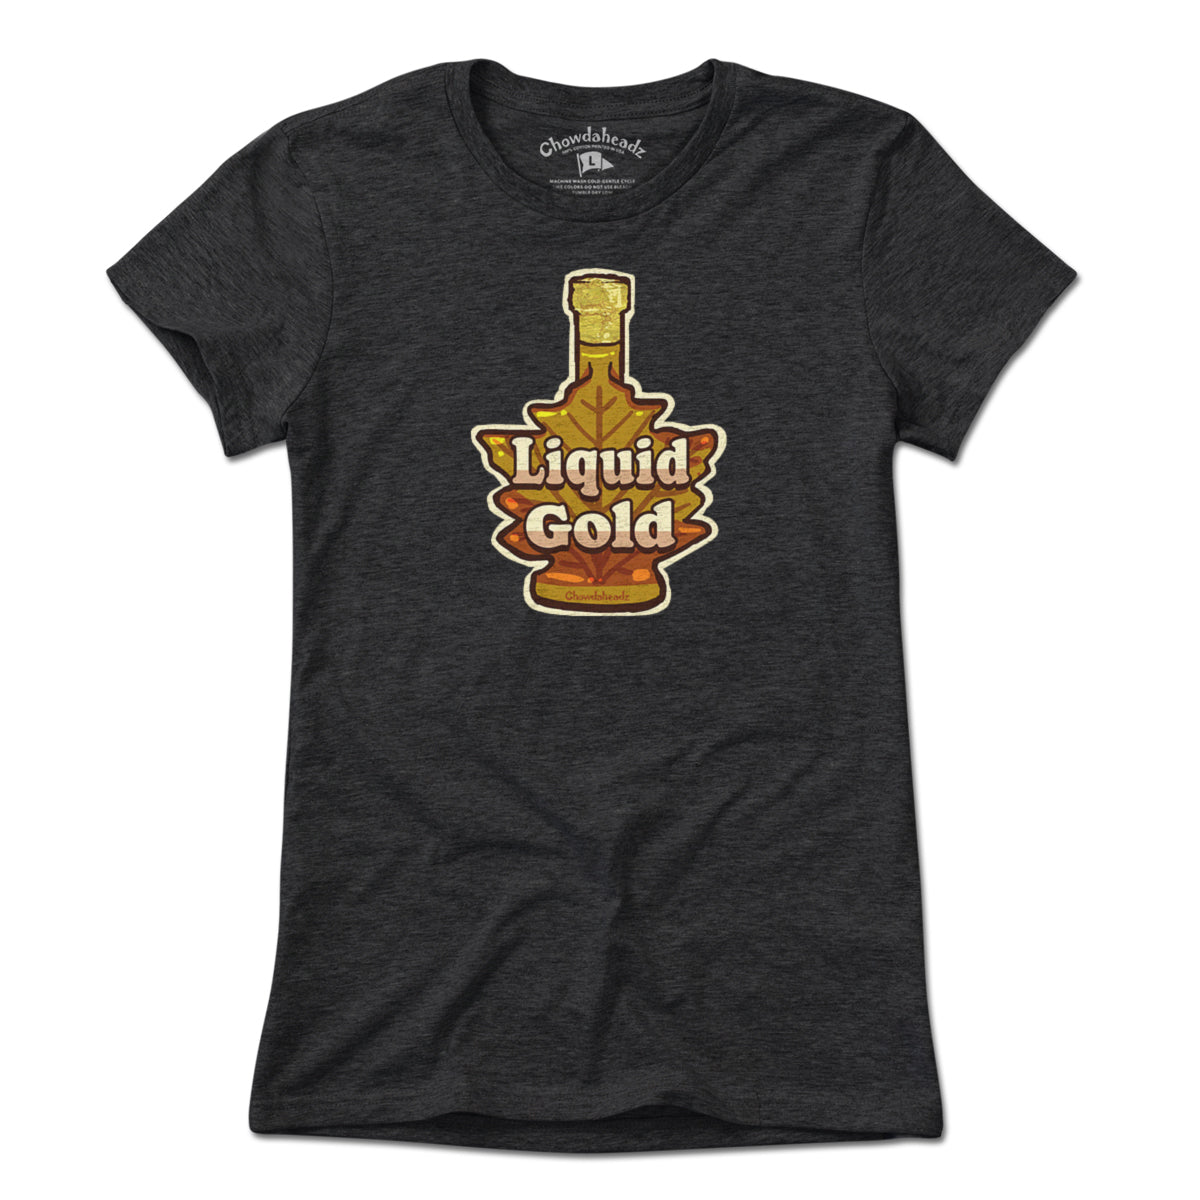 Liquid Gold T-Shirt - Chowdaheadz